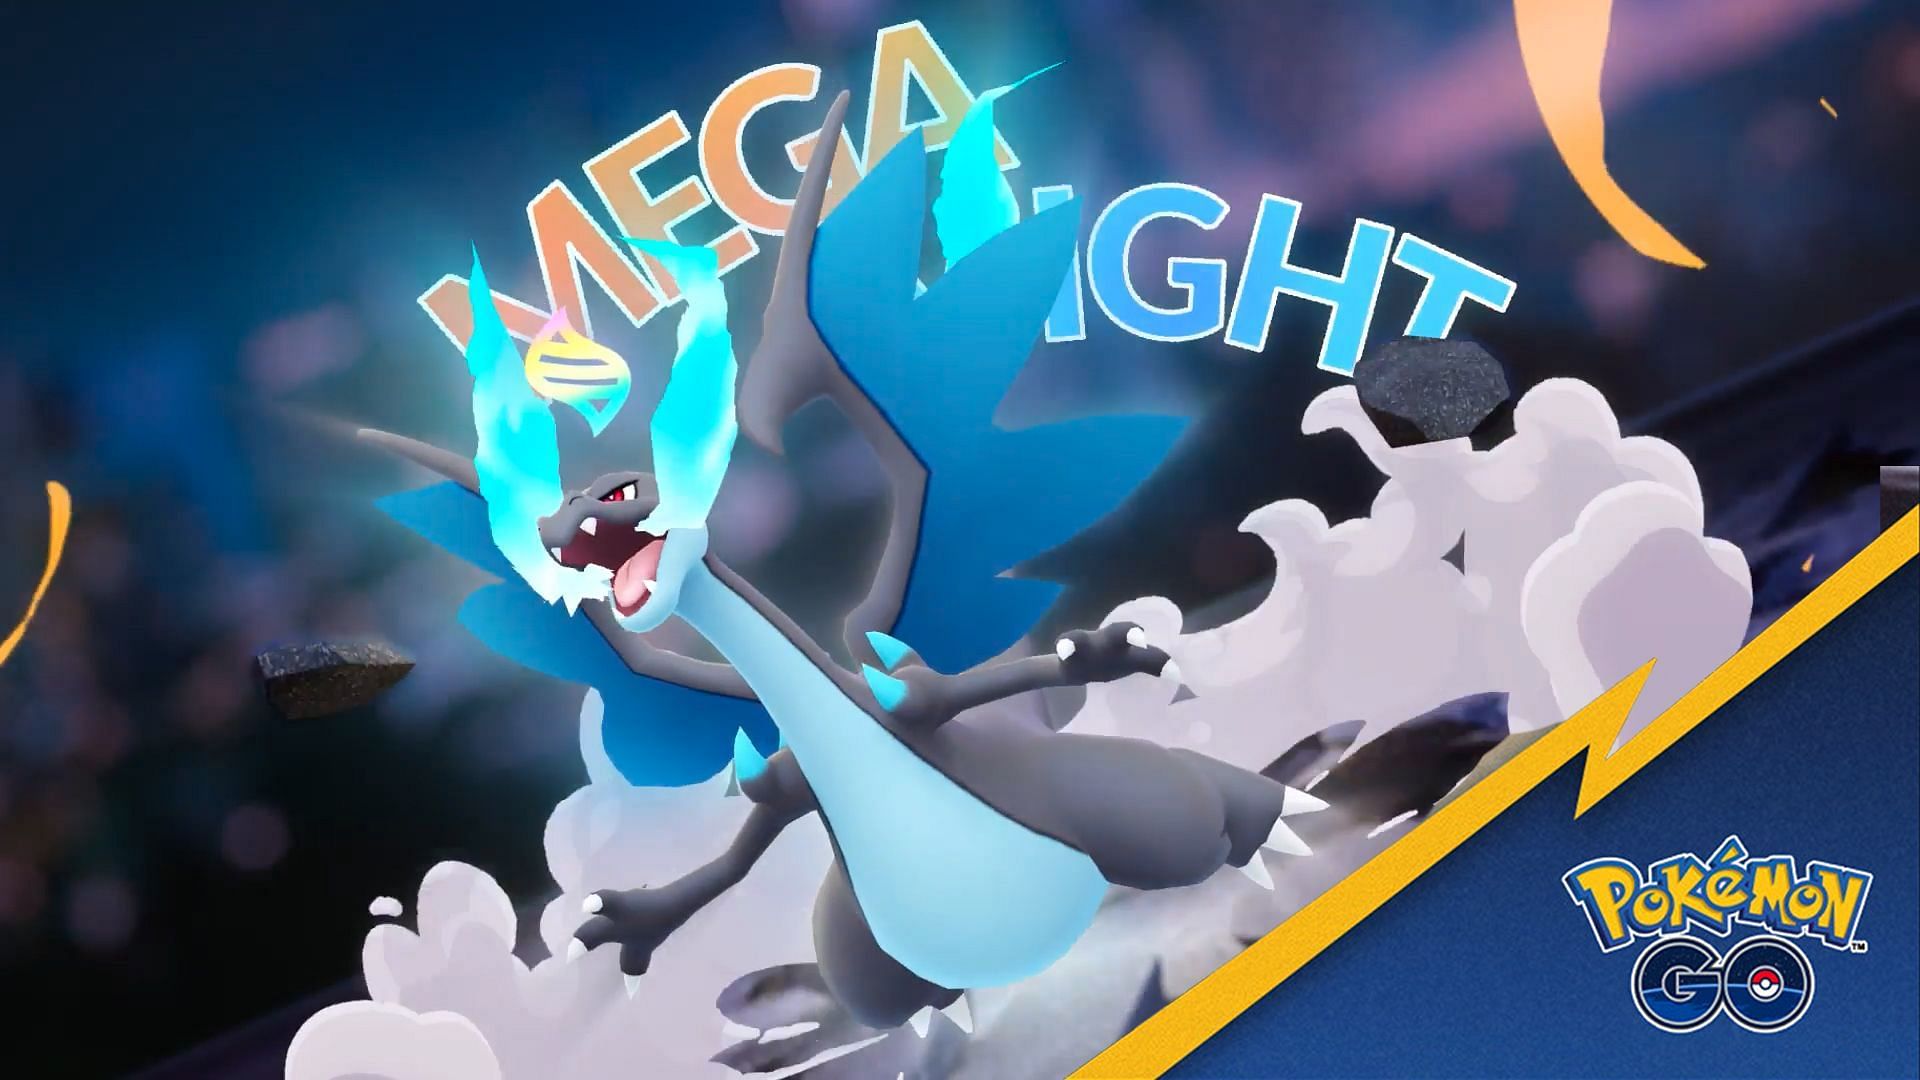 Official artwork for Pokemon GO showcasing Mega Evolution (Image via The Pokemon Company)